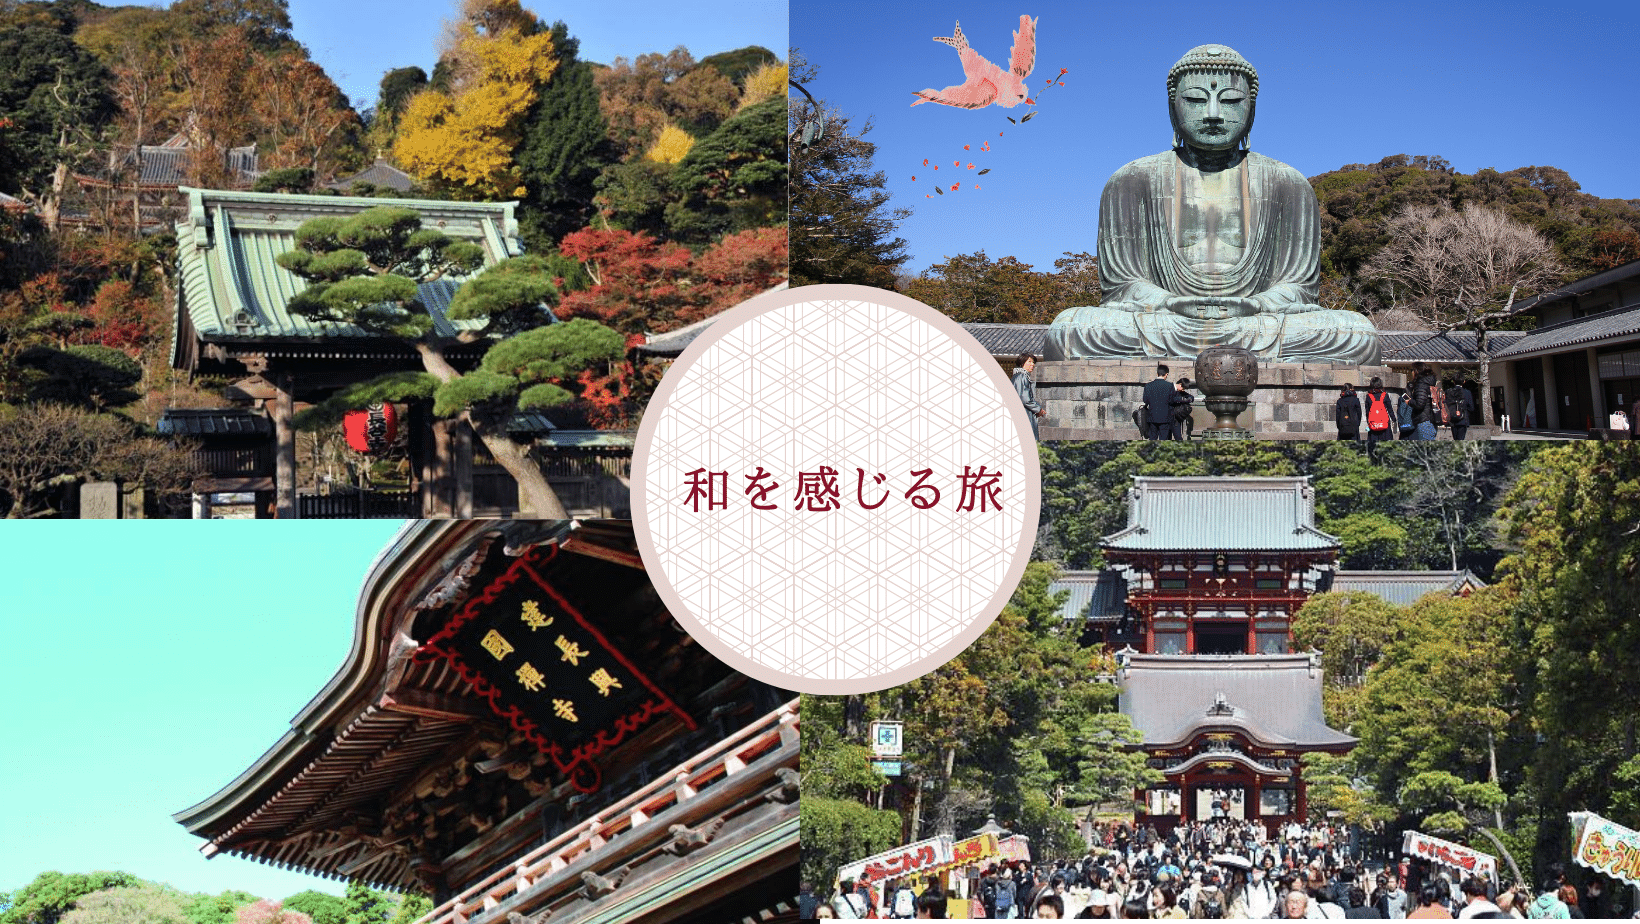 Best Temple in kamakura Japan